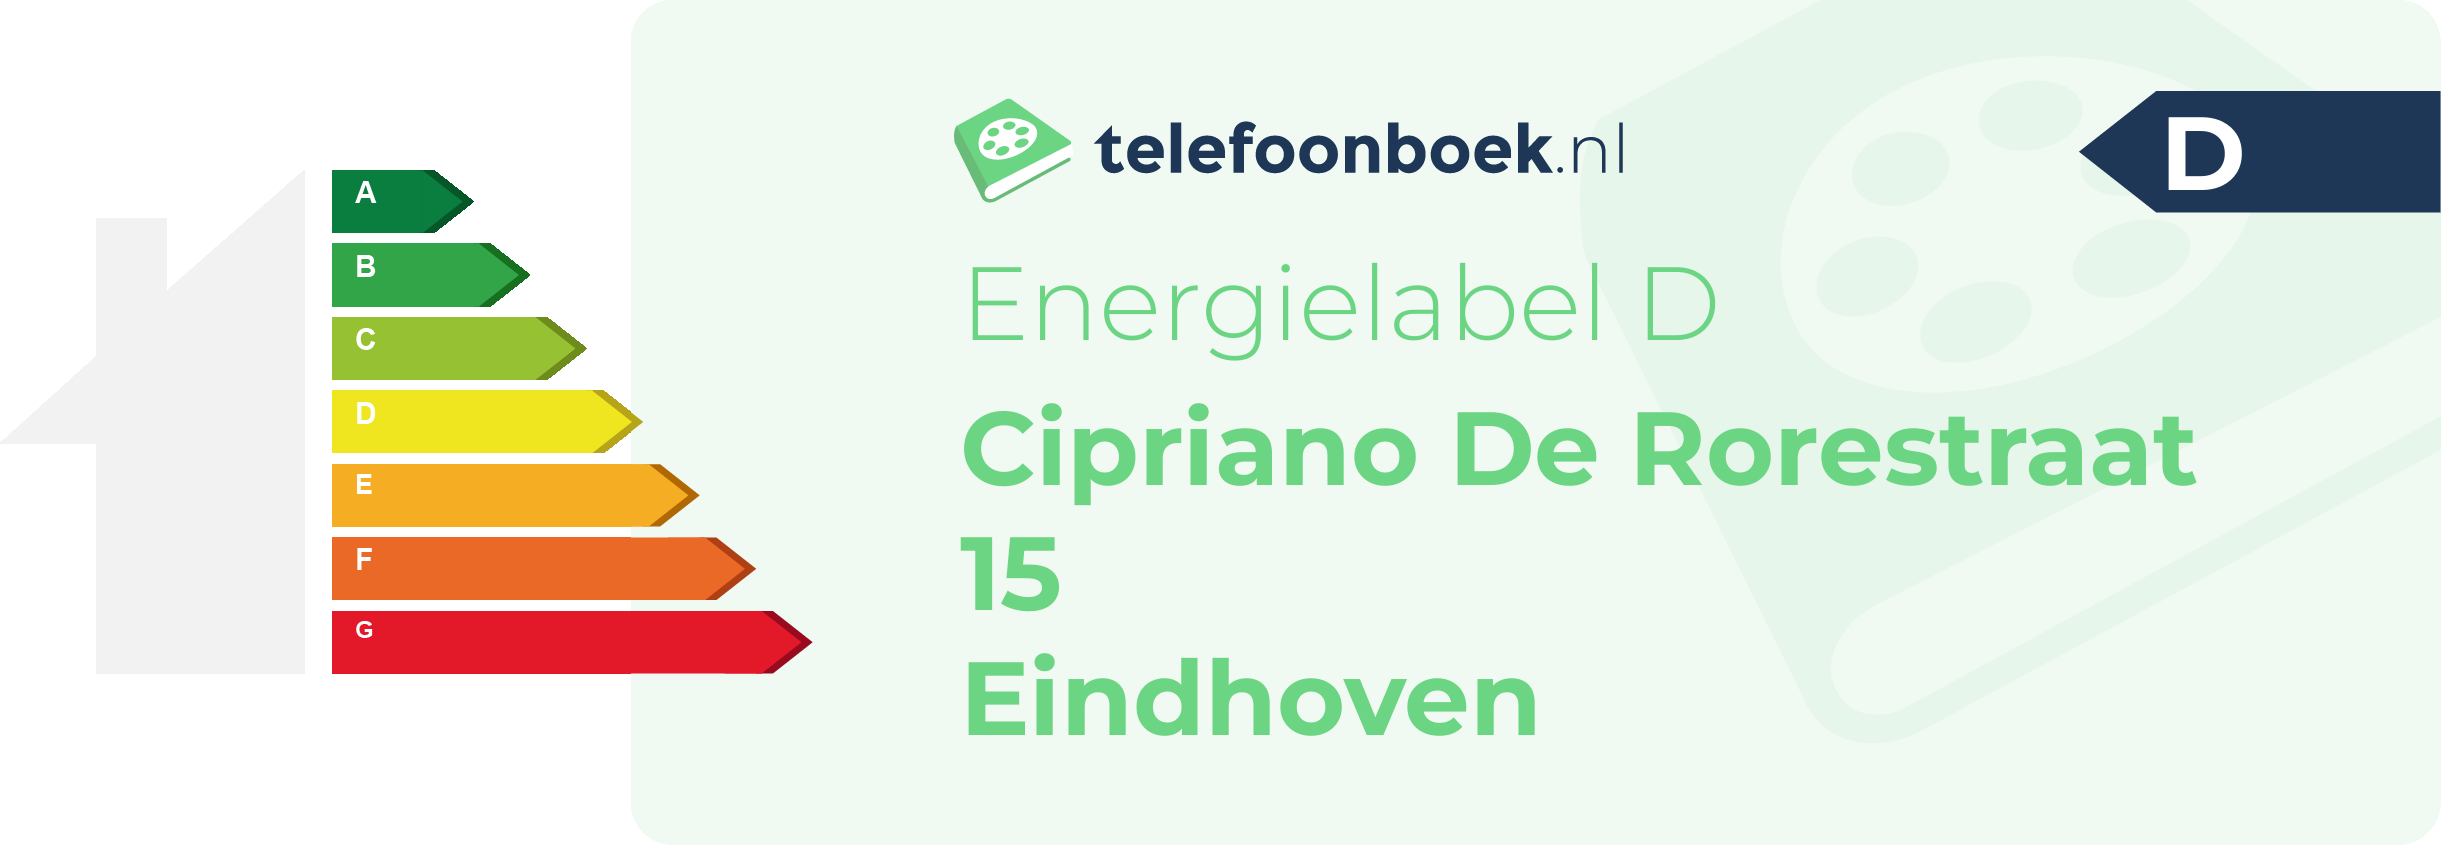 Energielabel Cipriano De Rorestraat 15 Eindhoven